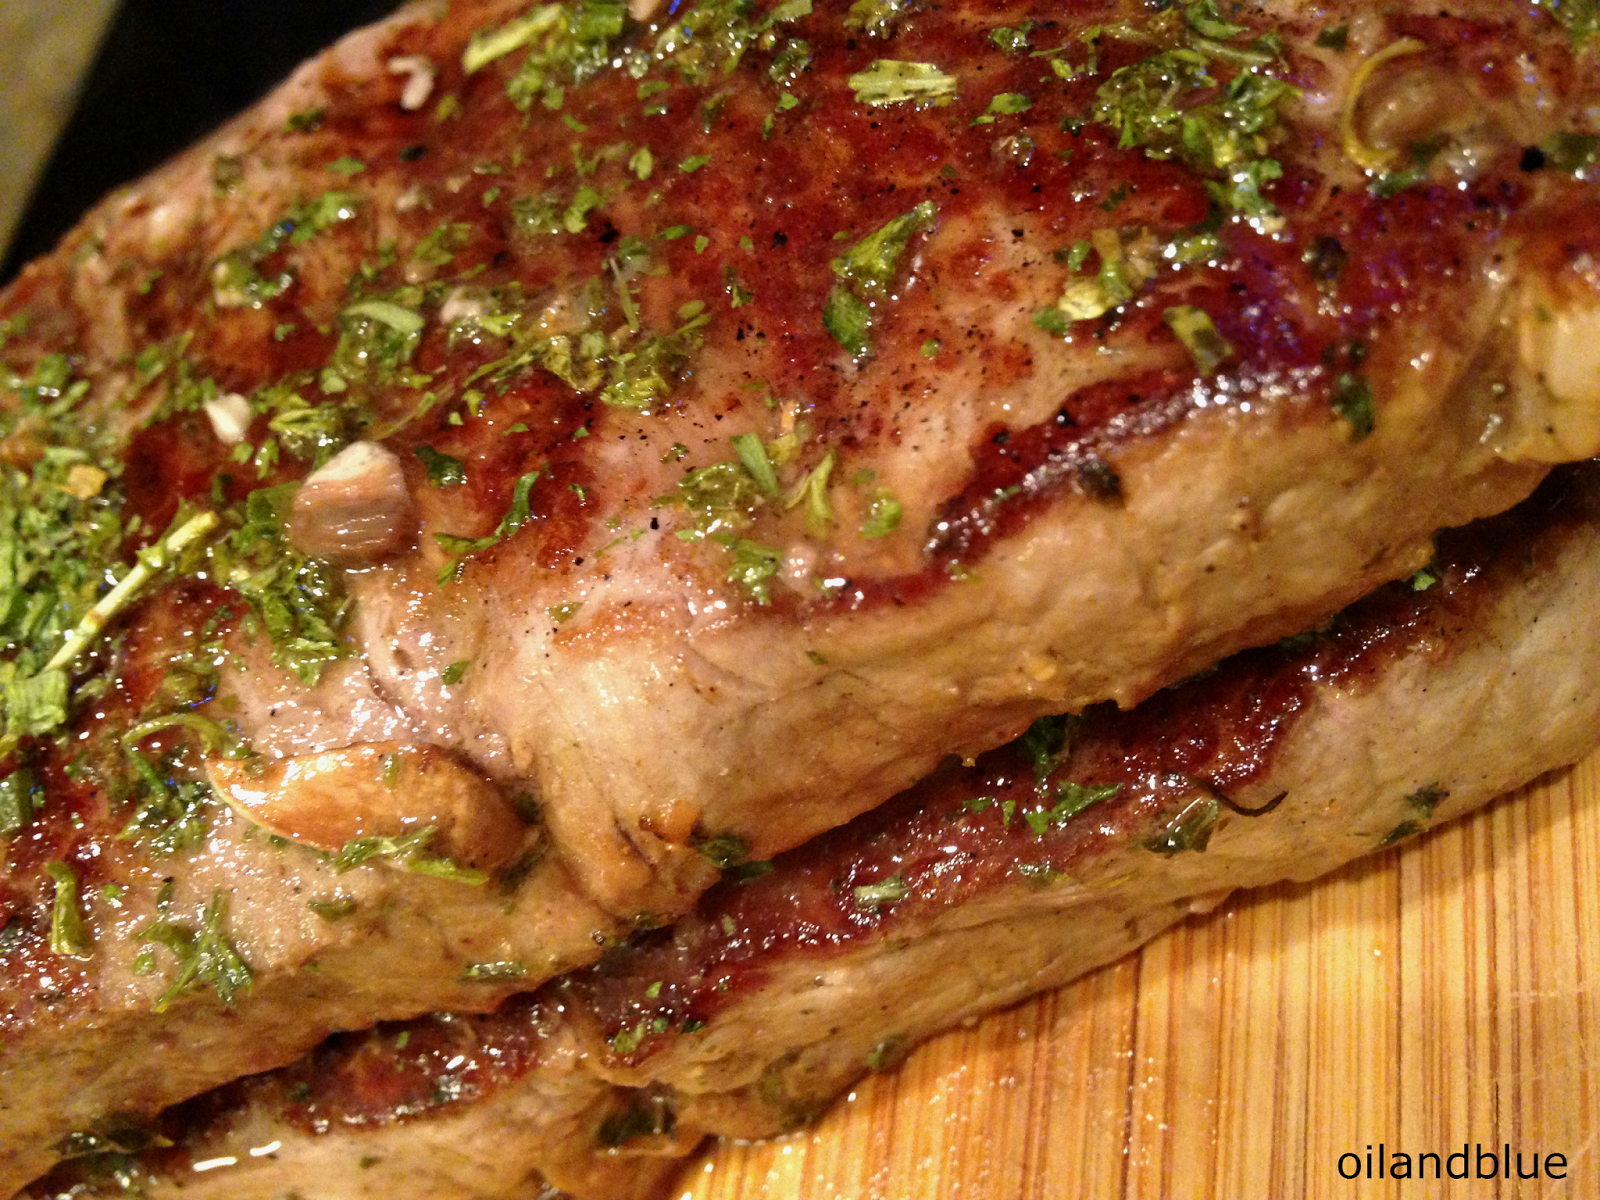 http://oilandblue.blogspot.com/2014/01/pan-seared-steak-with-balsamic-white.html